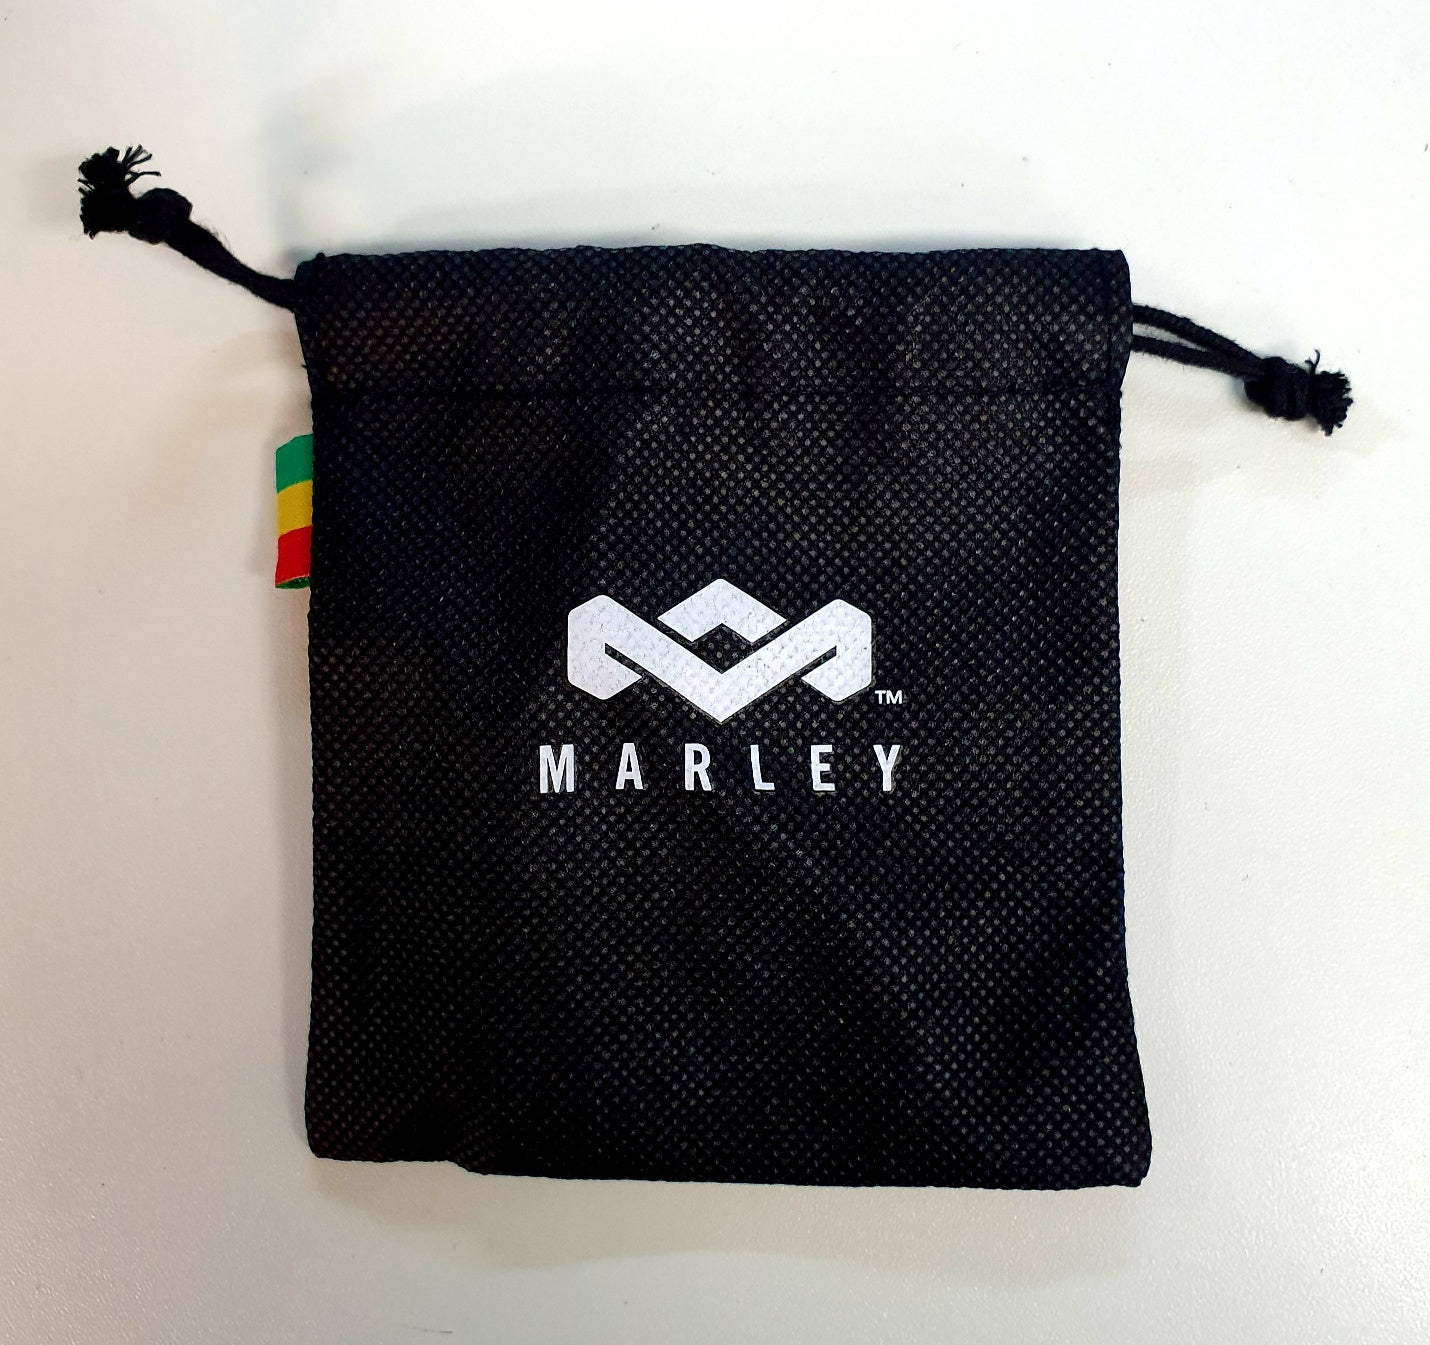 Marley headphone opberg zakje